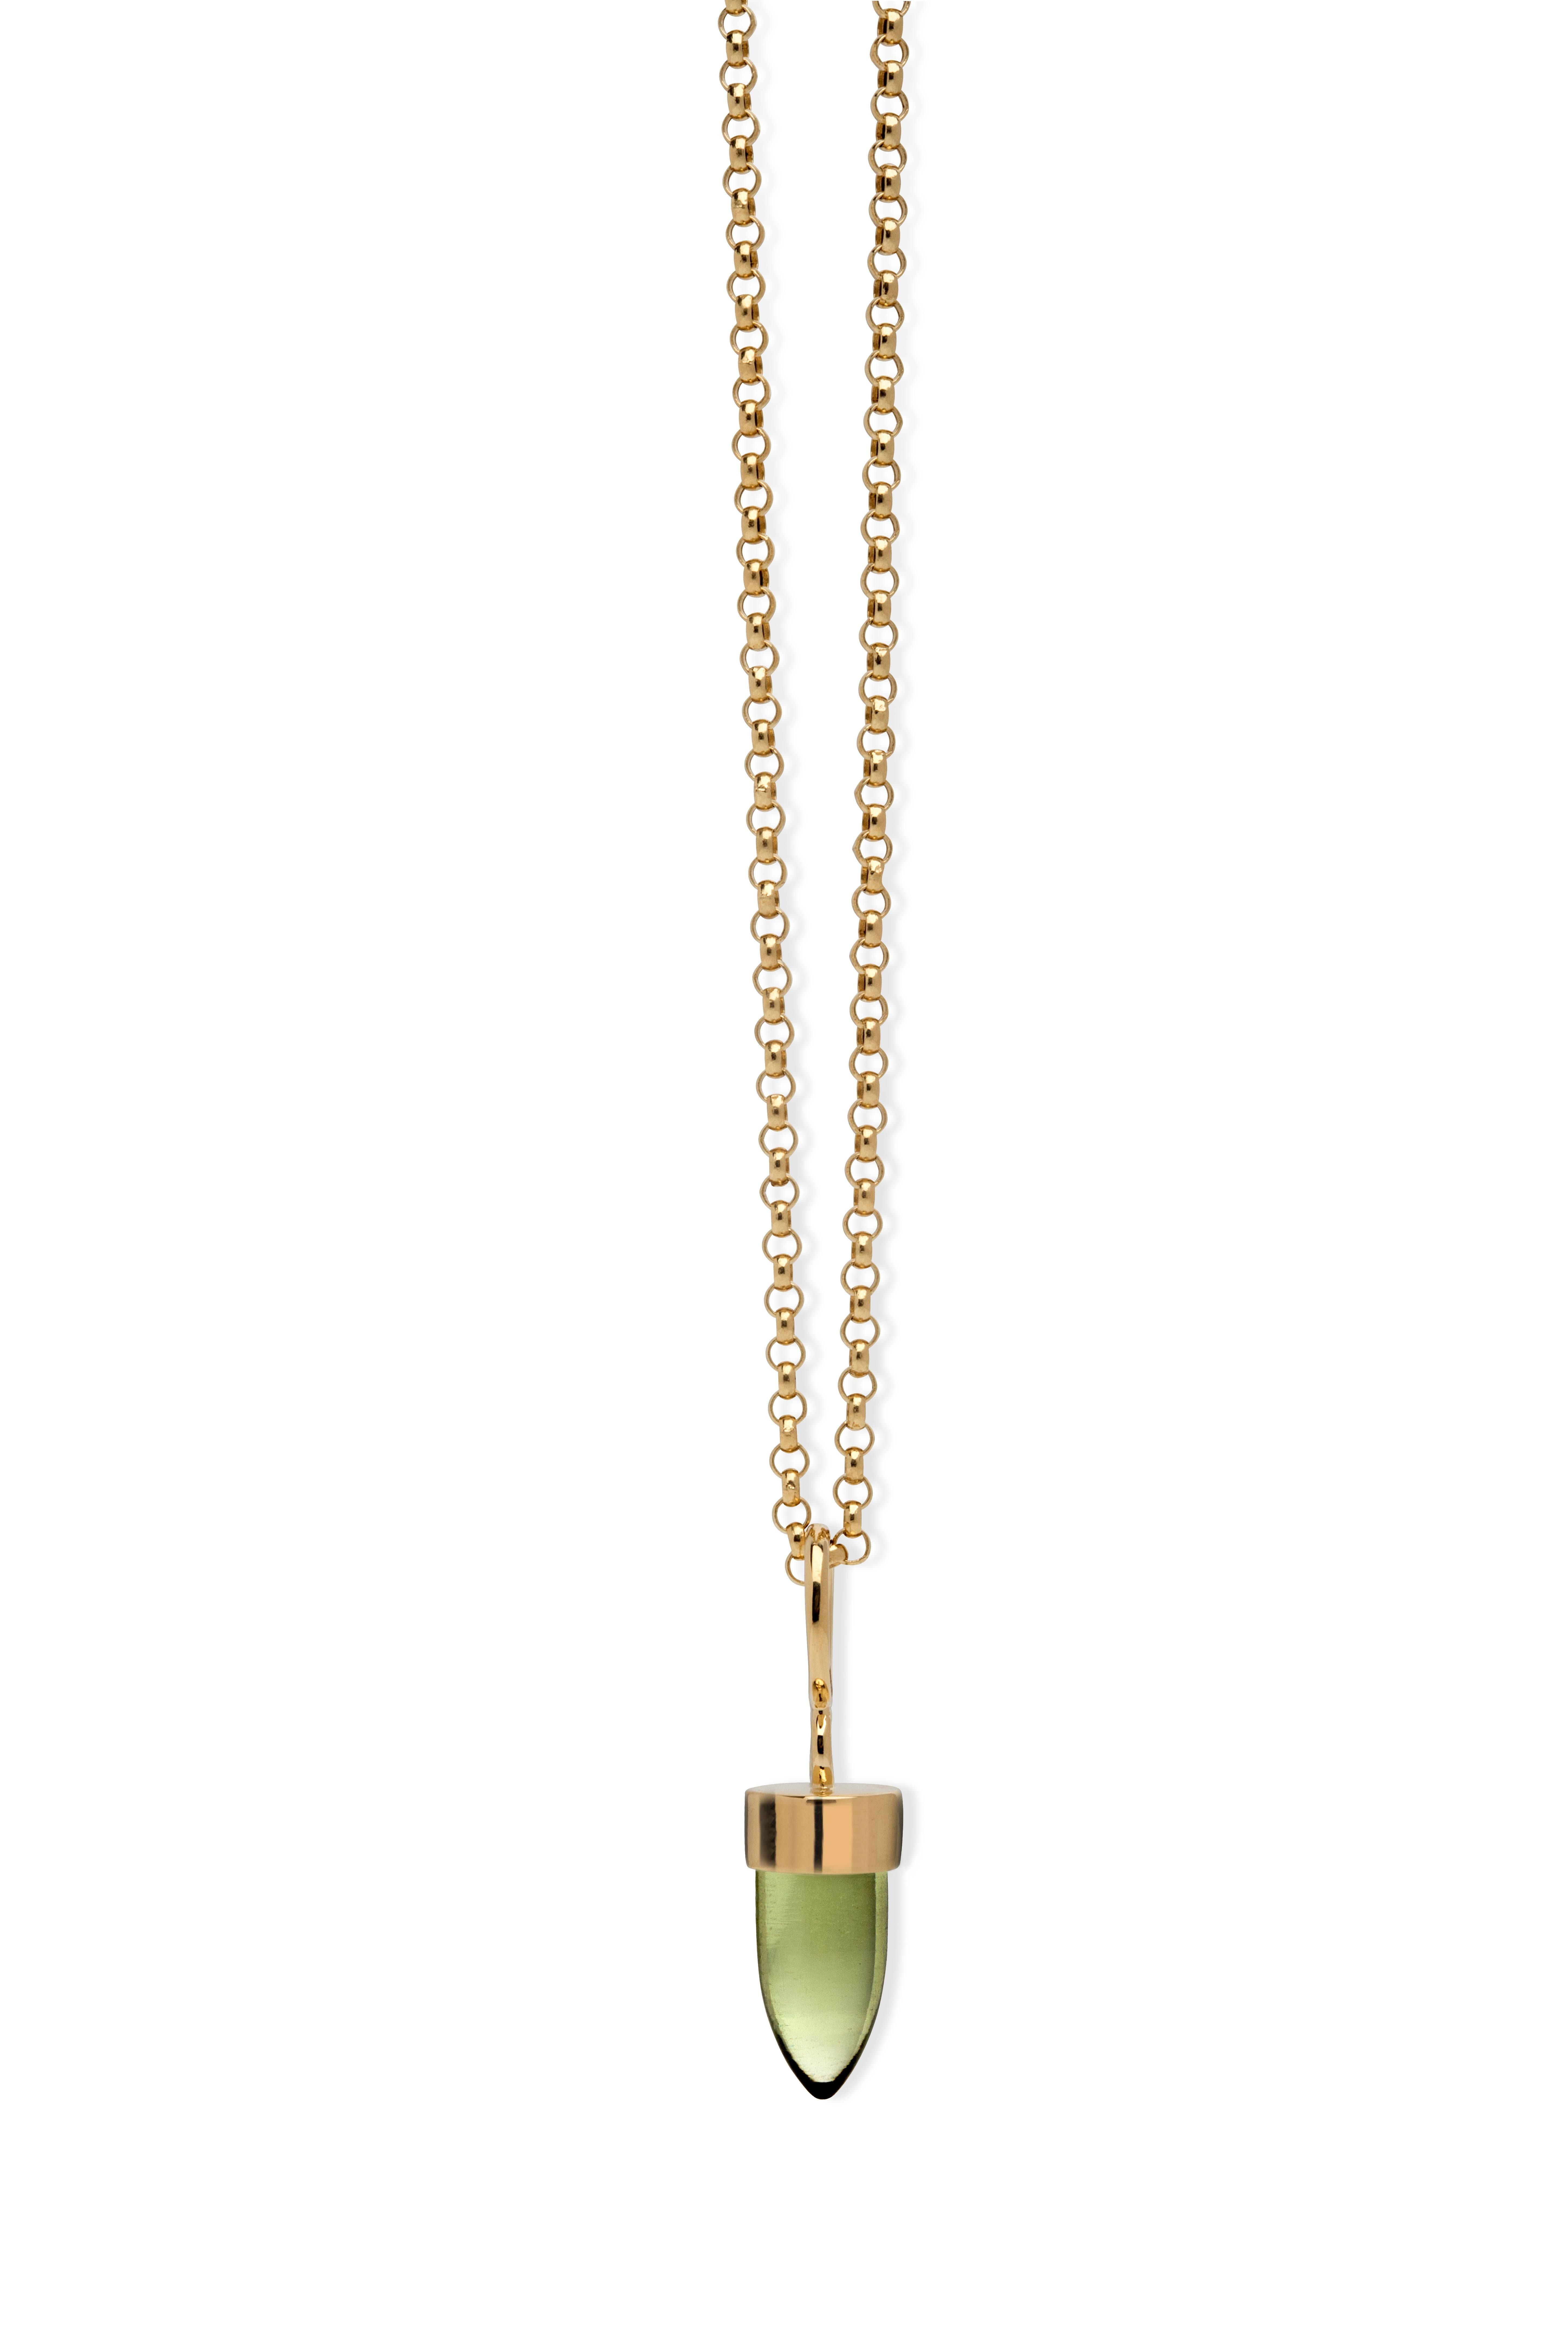 MAVIADA, collier pendentif moderne minimaliste en or 18 carats avec améthyste violette en vente 6